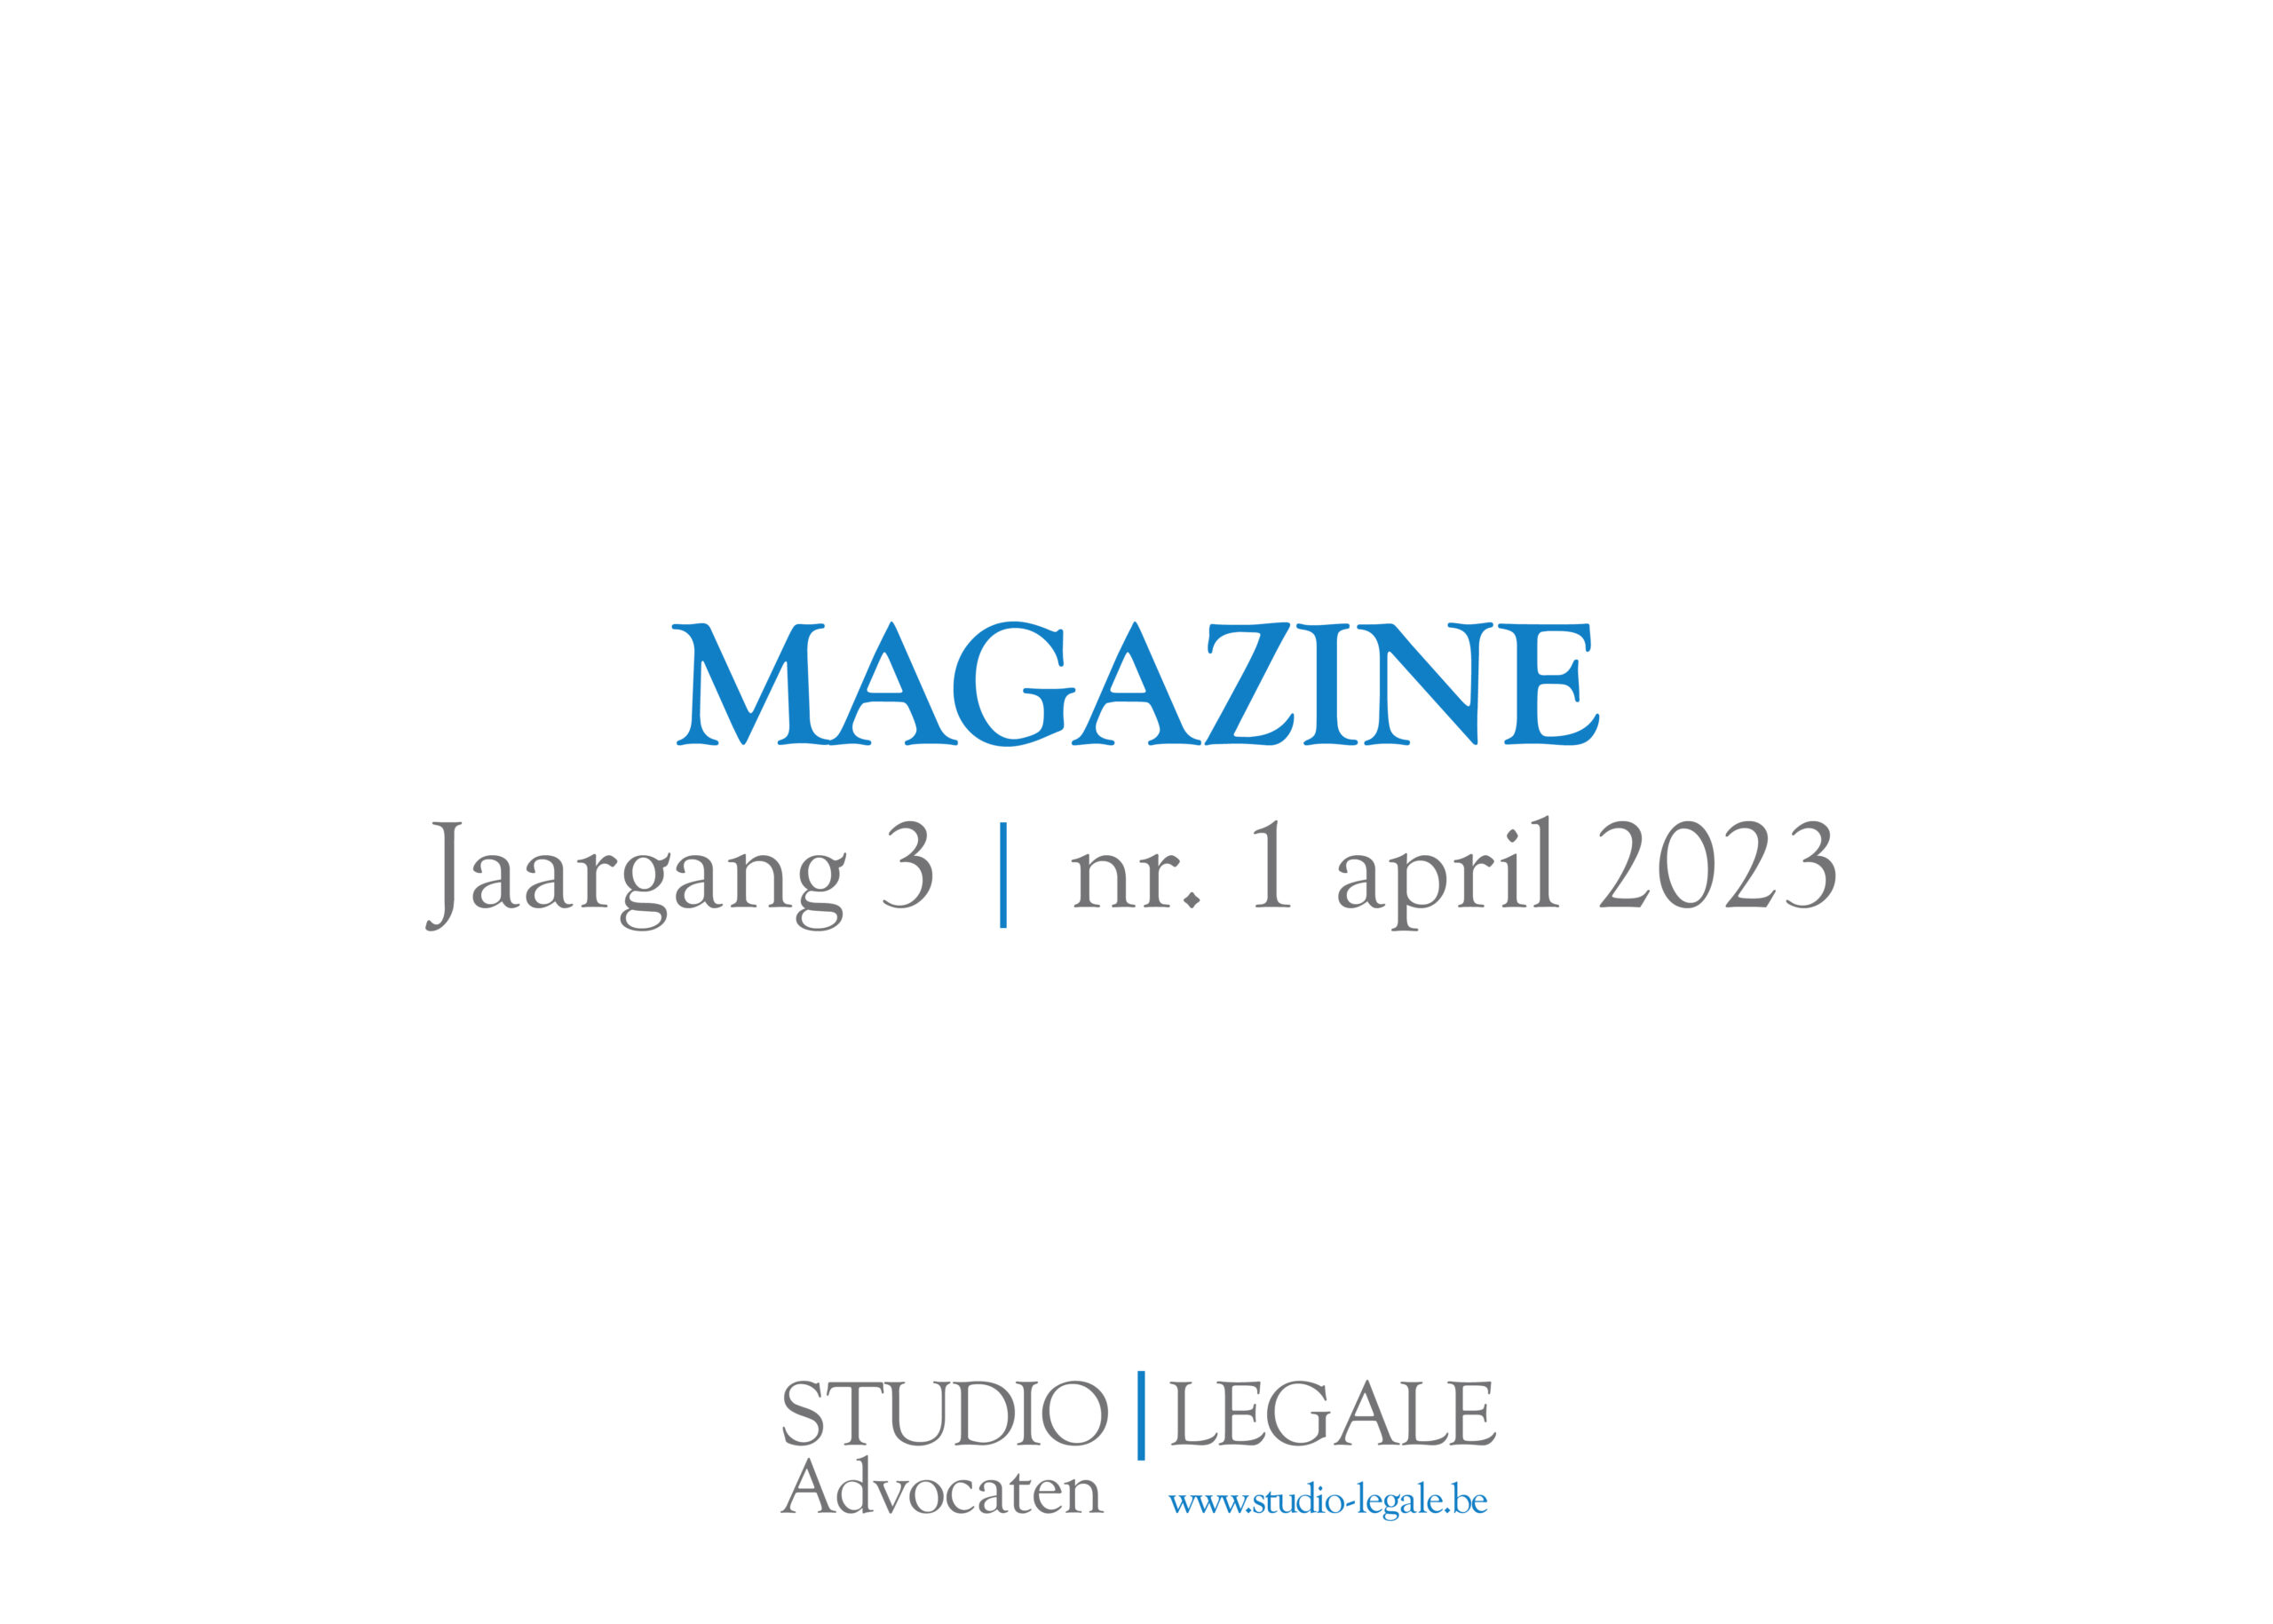 STUDIO | LEGALE Magazine | Jaargang 3 | nr. 1 april 2023